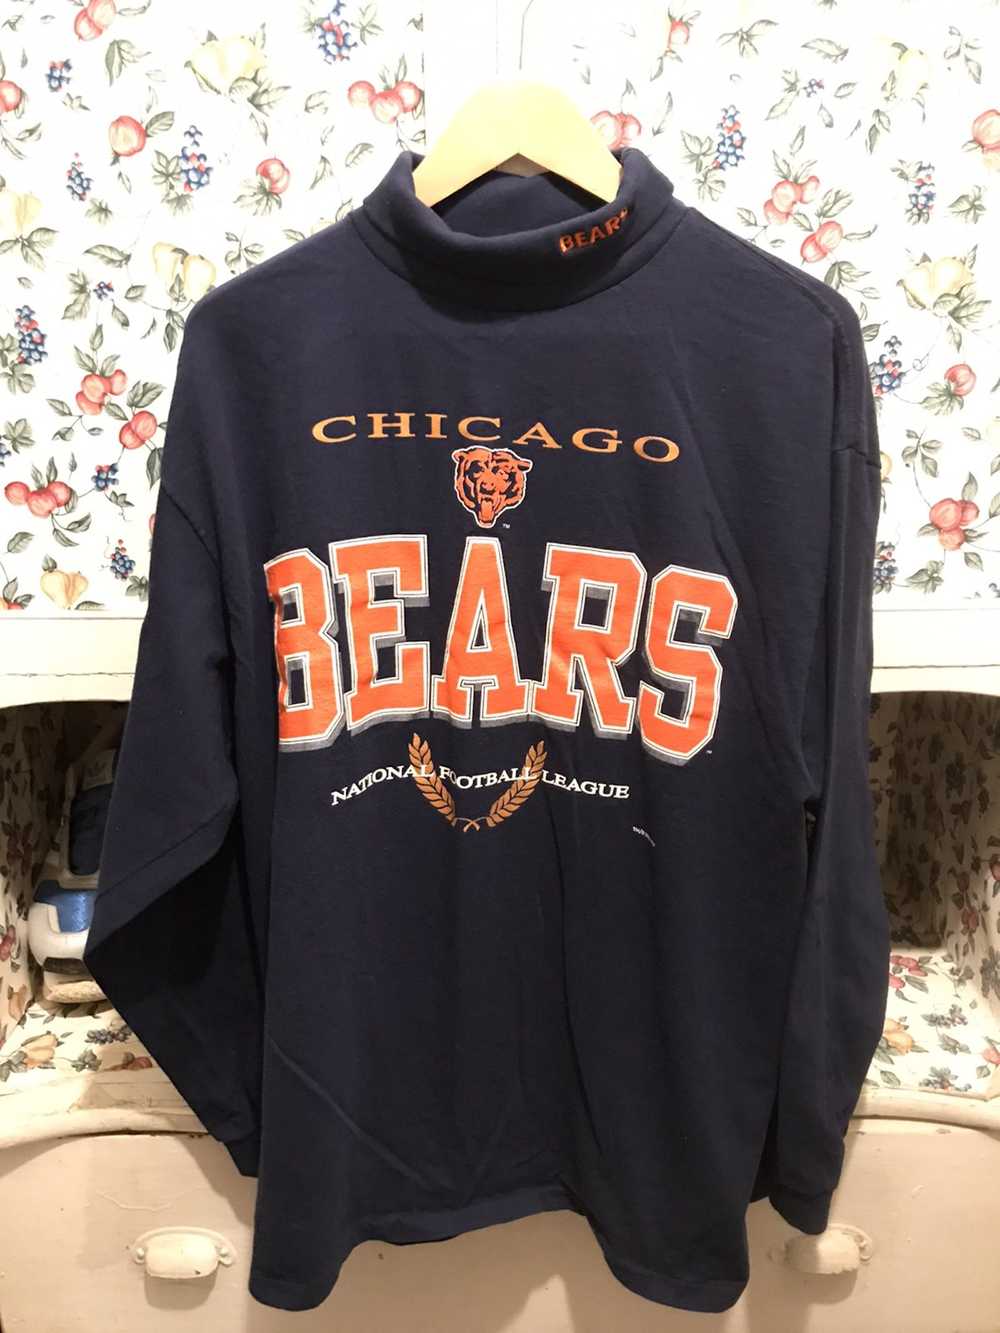 Vintage Vintage 90s Bears Longsleeve Shirt - image 1